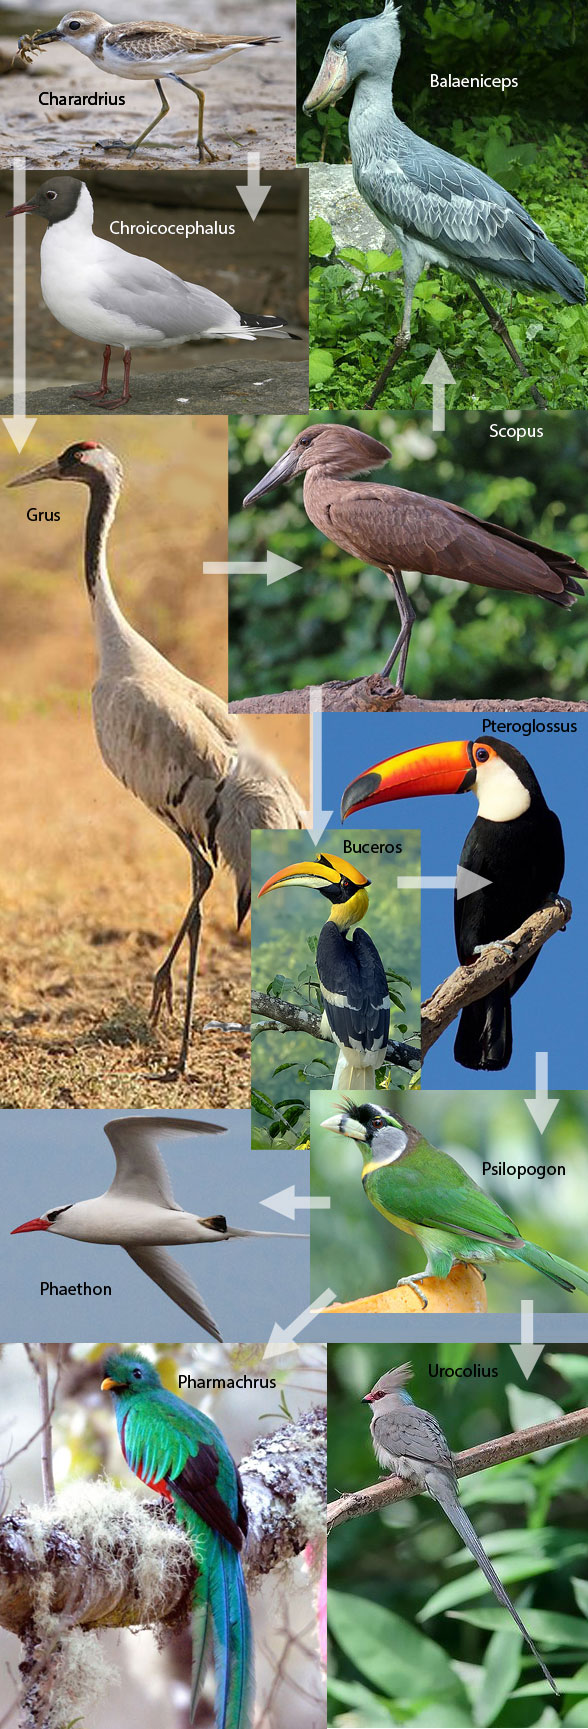 toucan and hornbill evolution